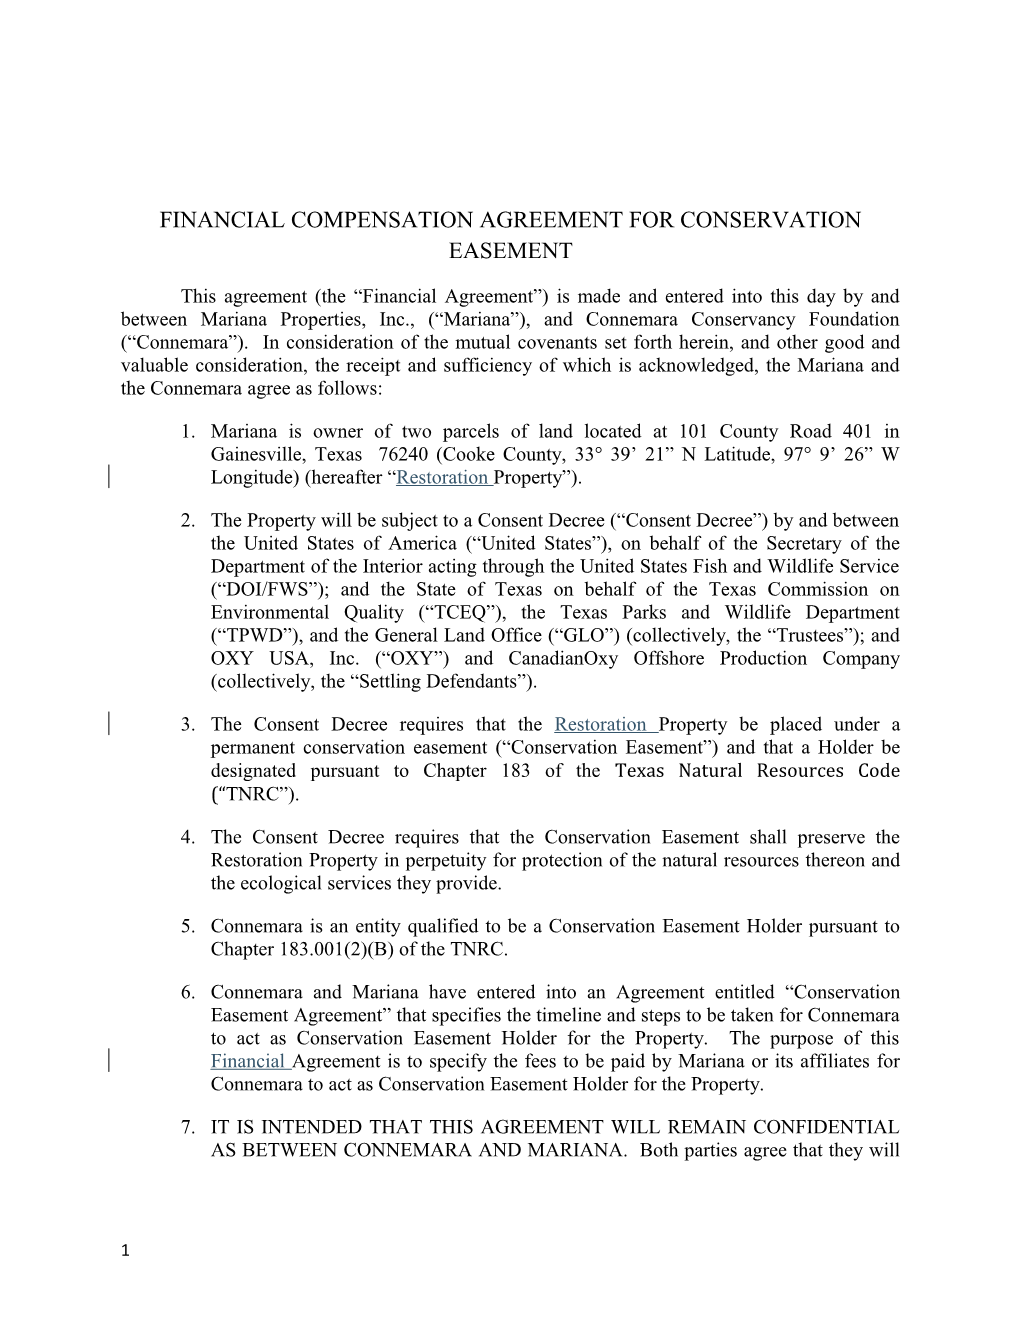 Financial Compensation Agreement for Conservation Easement